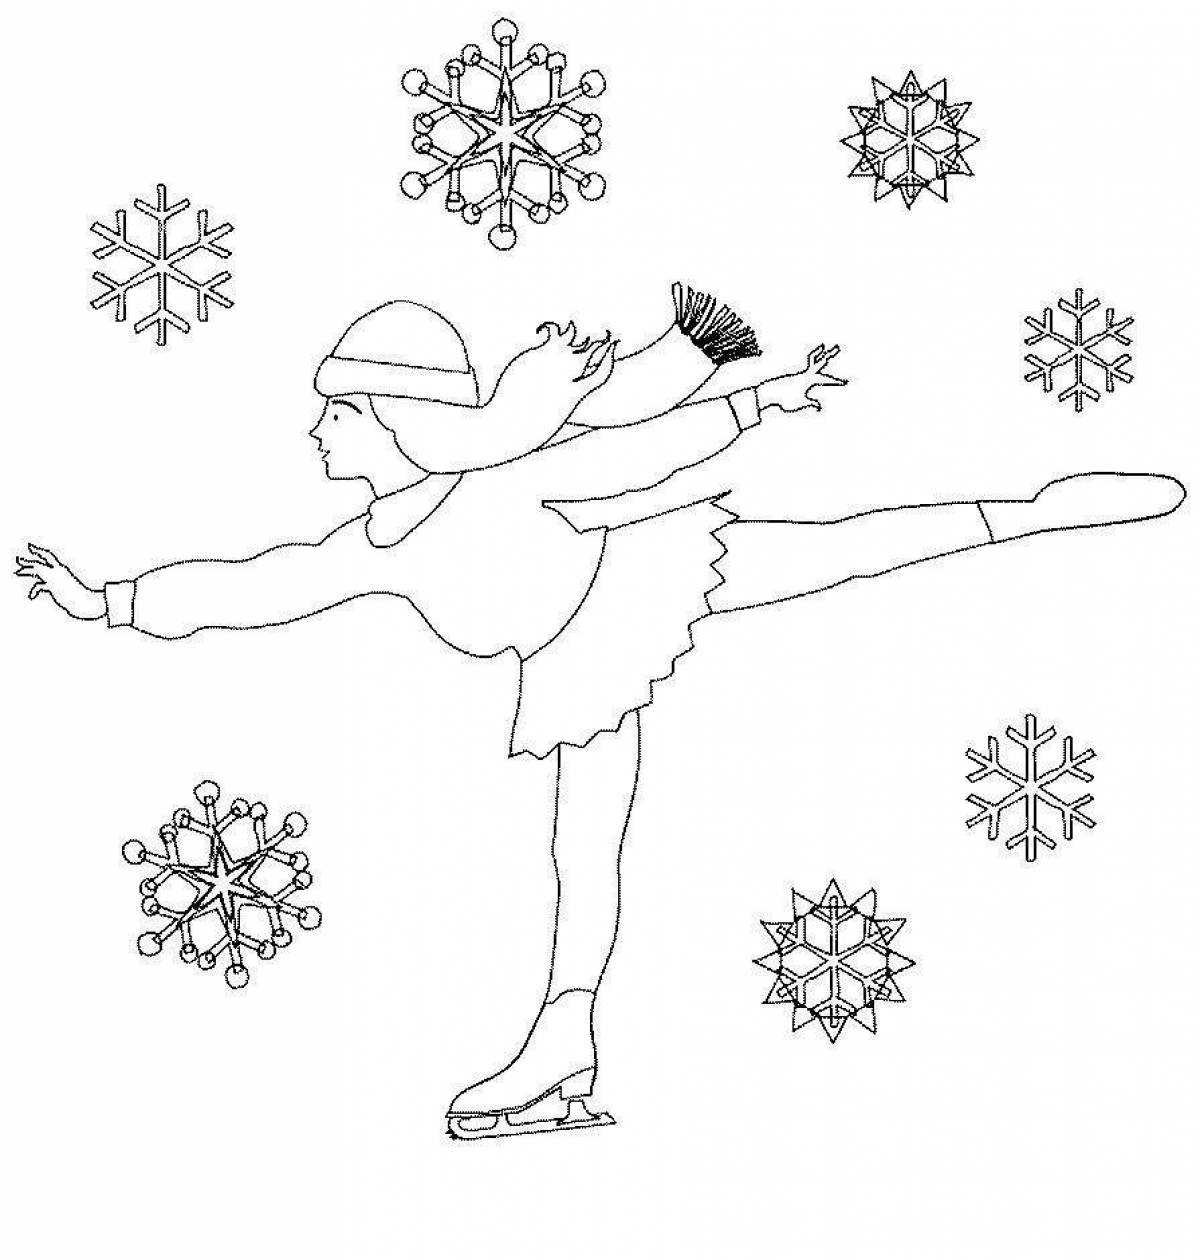 Coloring page joyful figure skating